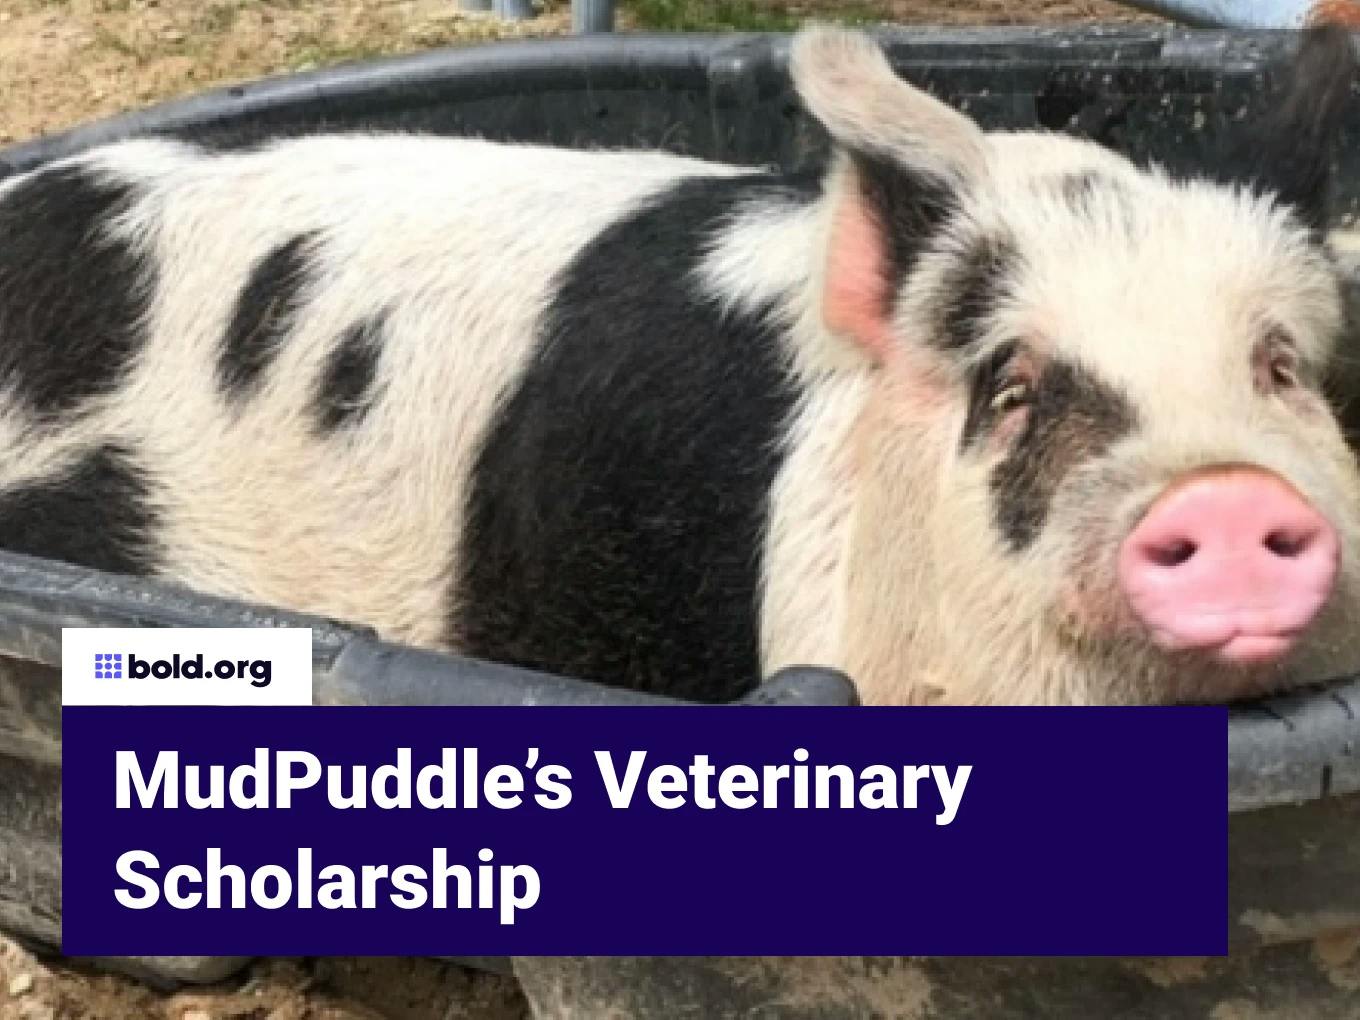 MudPuddle’s Veterinary Scholarship